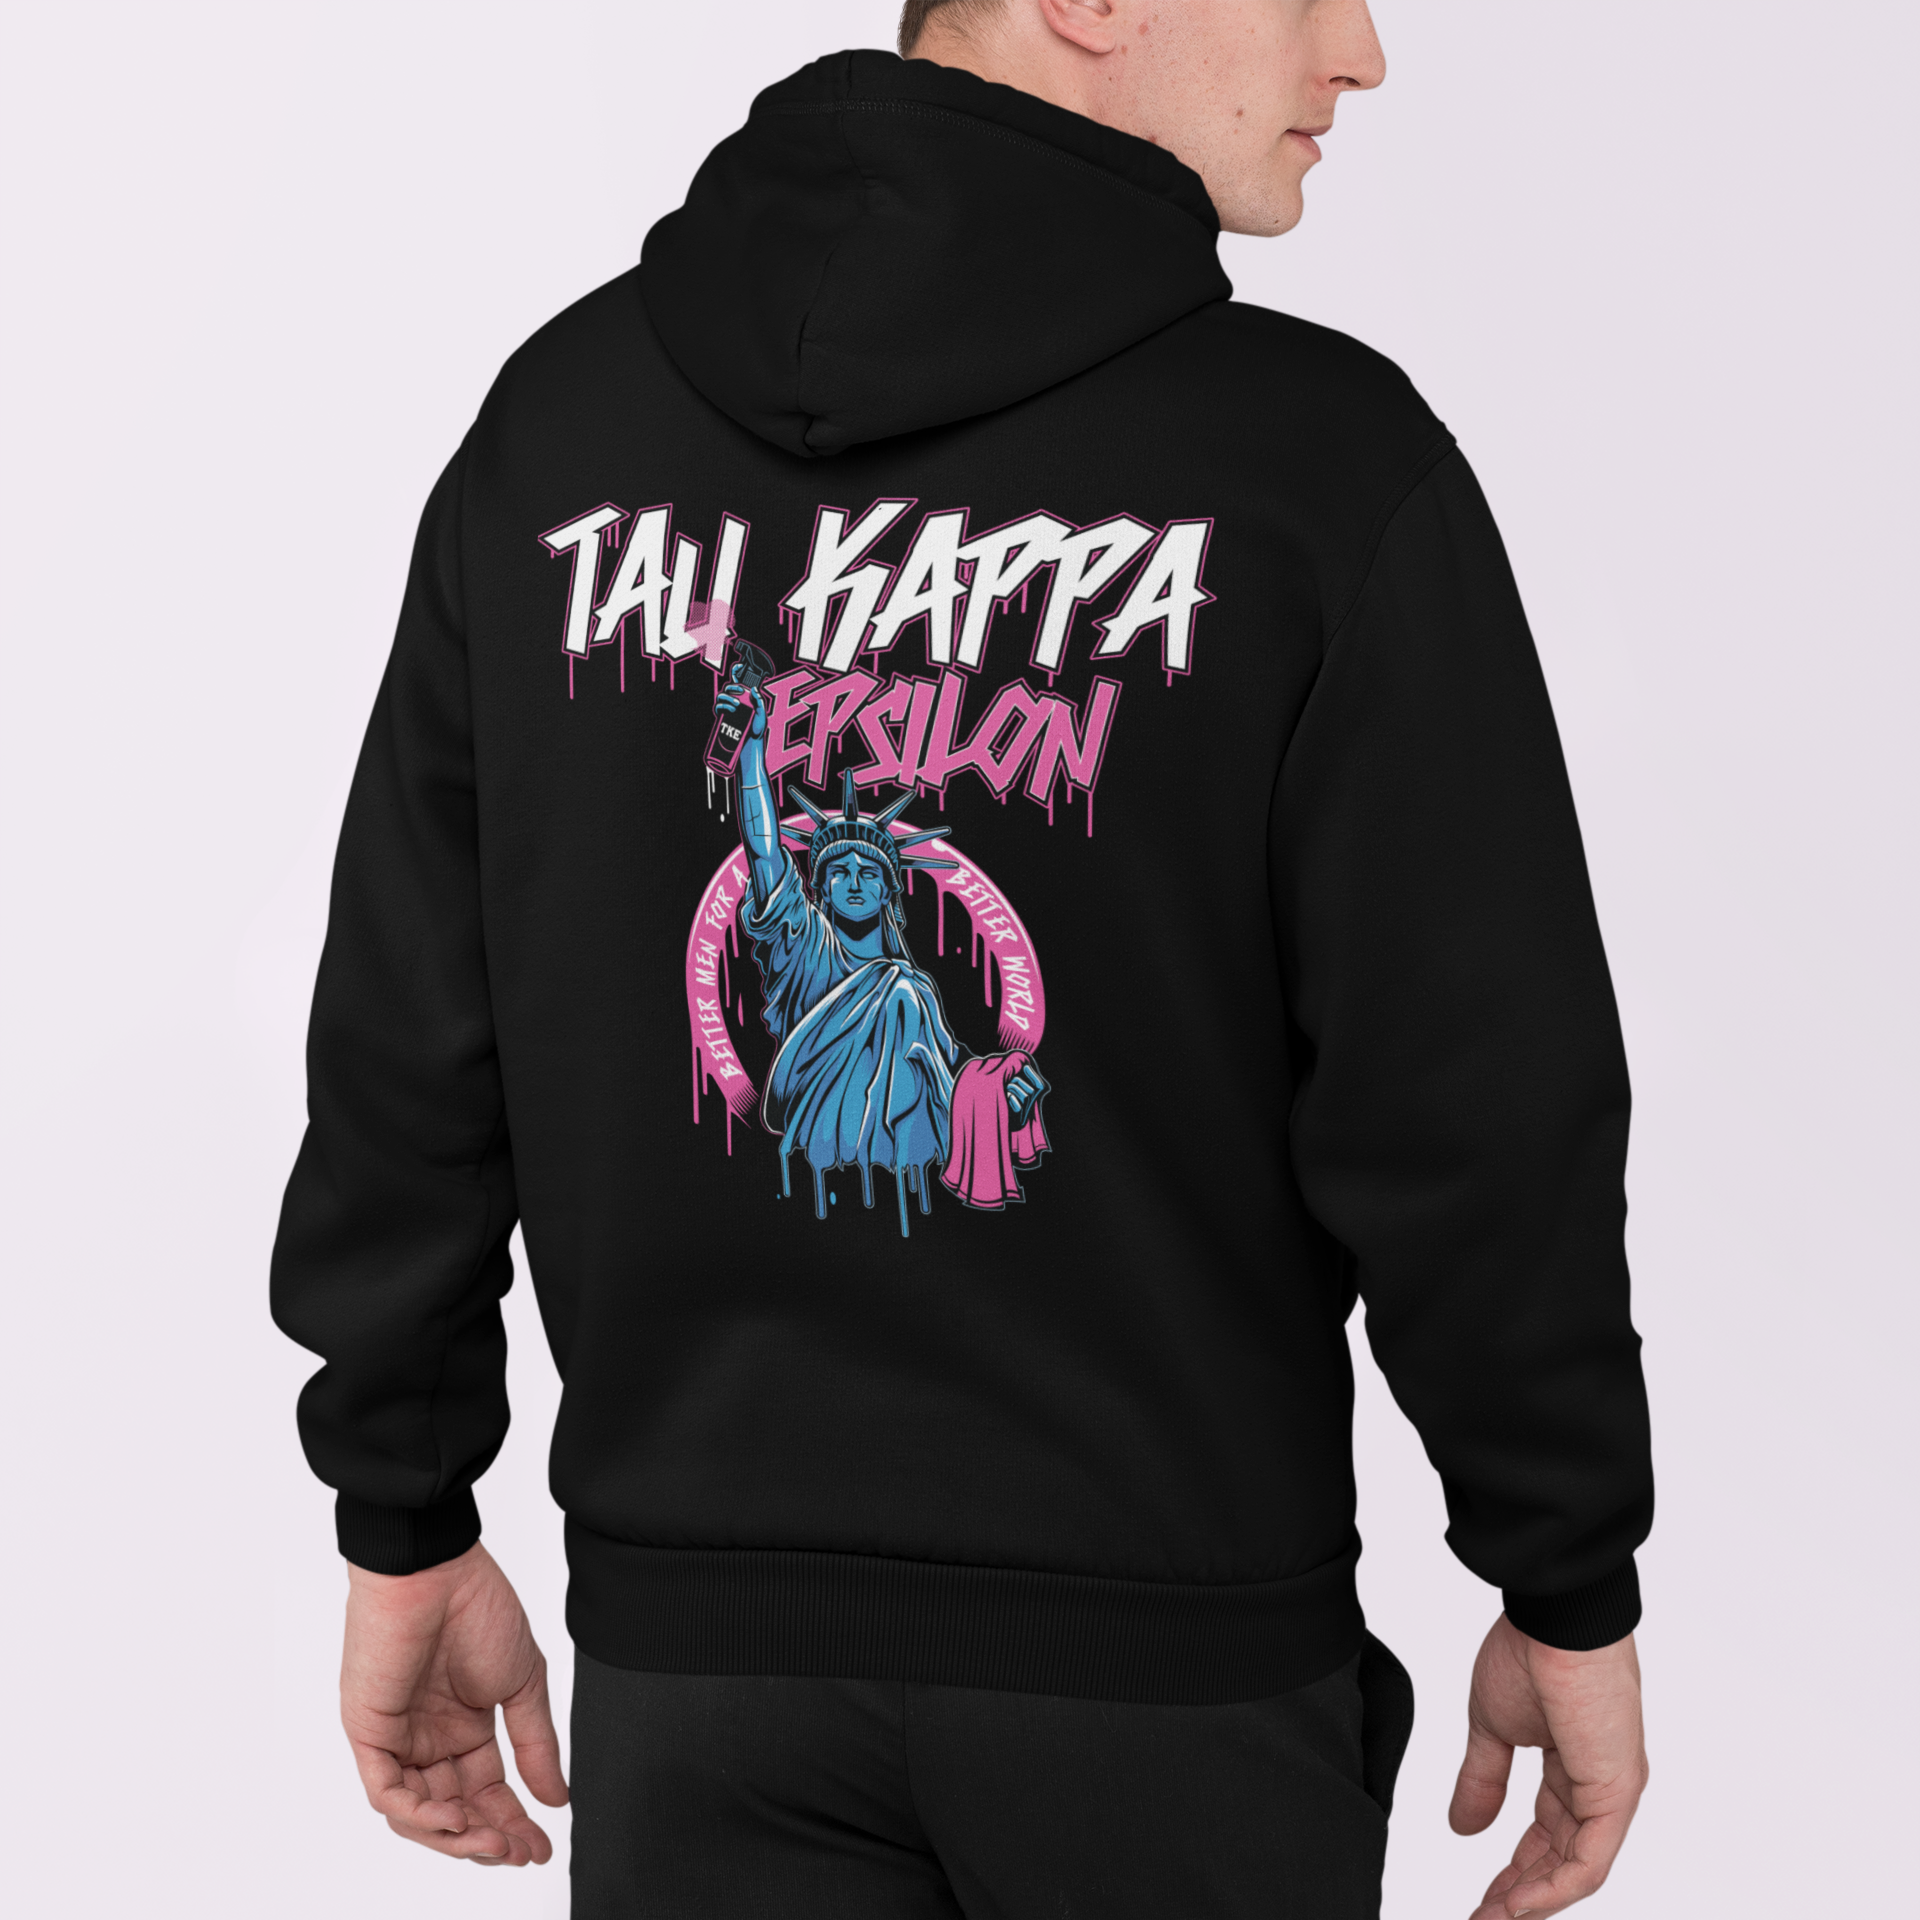 Tau Kappa Epsilon Graphic Hoodie | Liberty Rebel | TKE Clothing and Merchandise model 